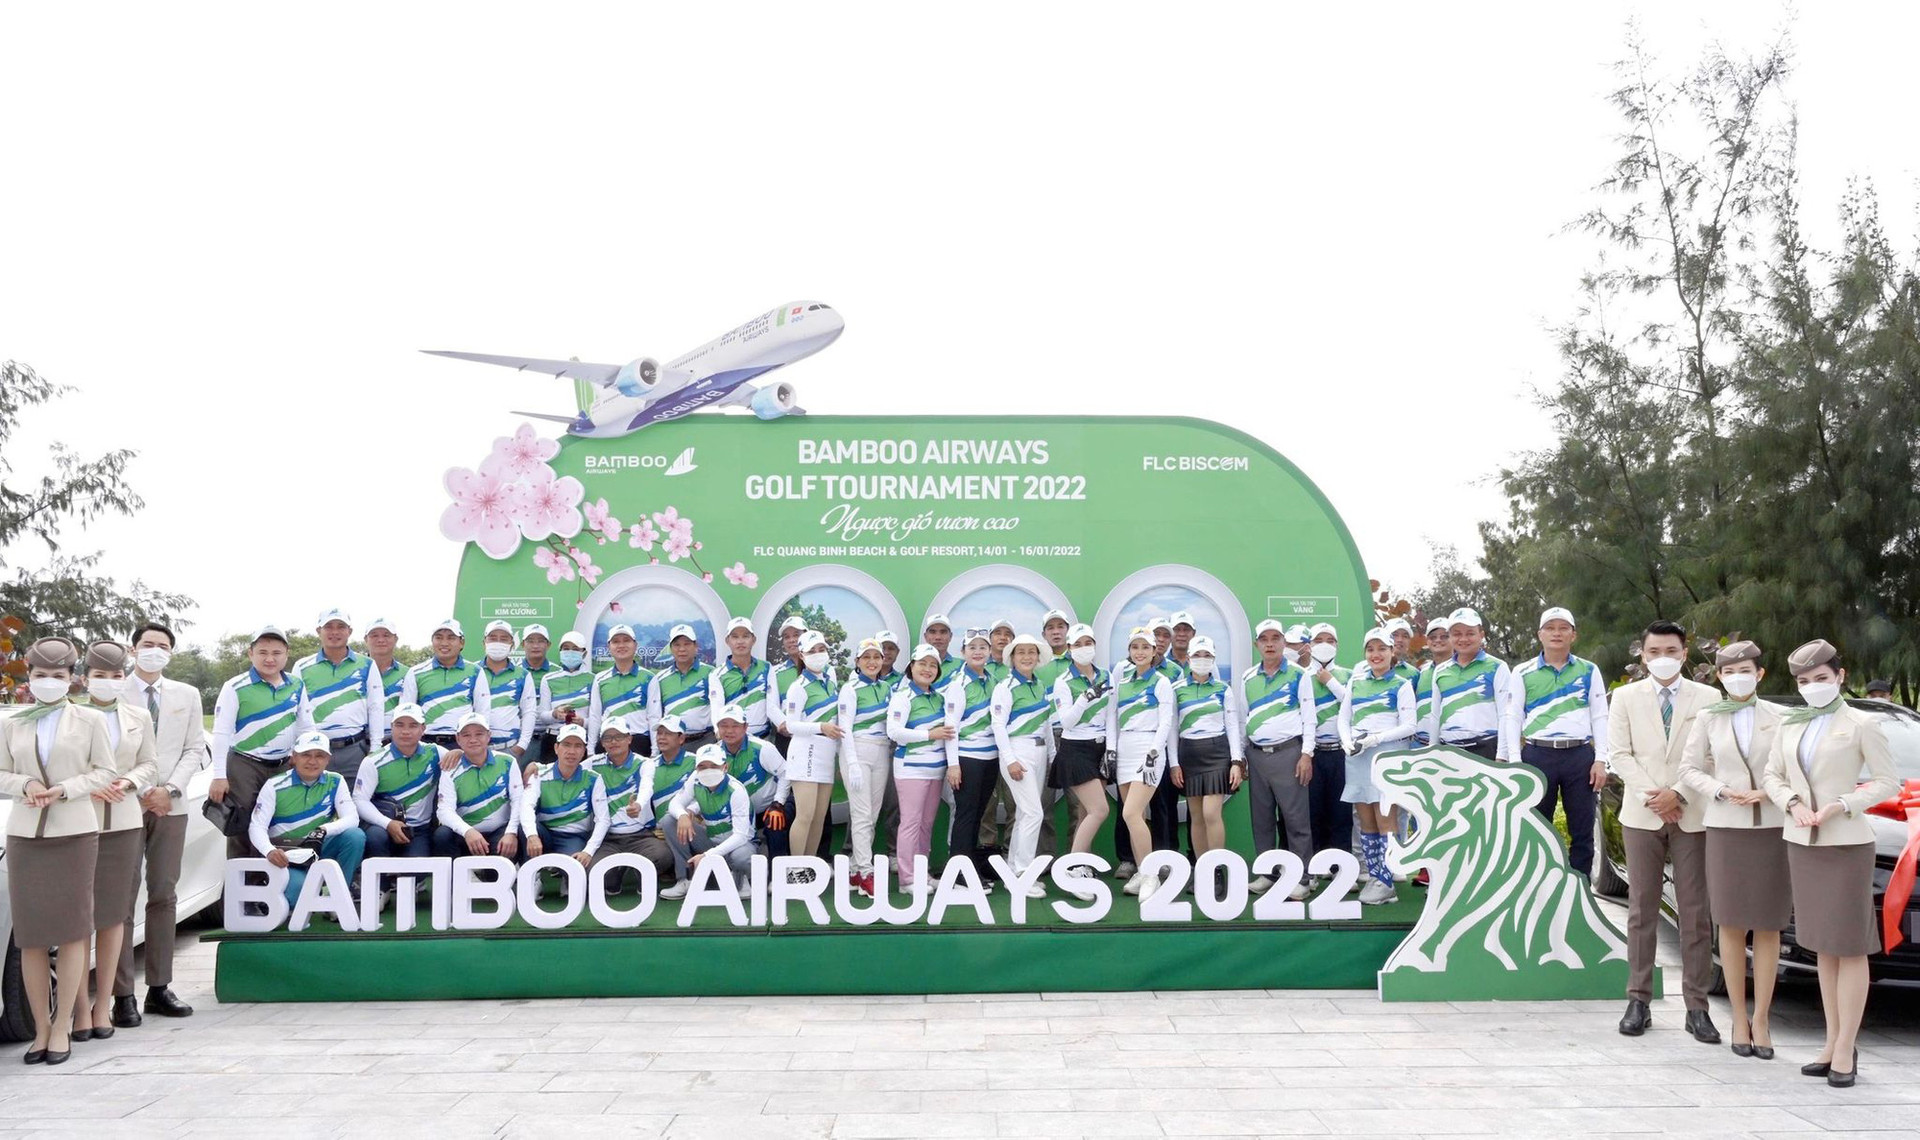 700 golfer săn giải thưởng HIO 100 tỷ tại Bamboo Airways Golf Tournament 2022 - Ảnh 1.